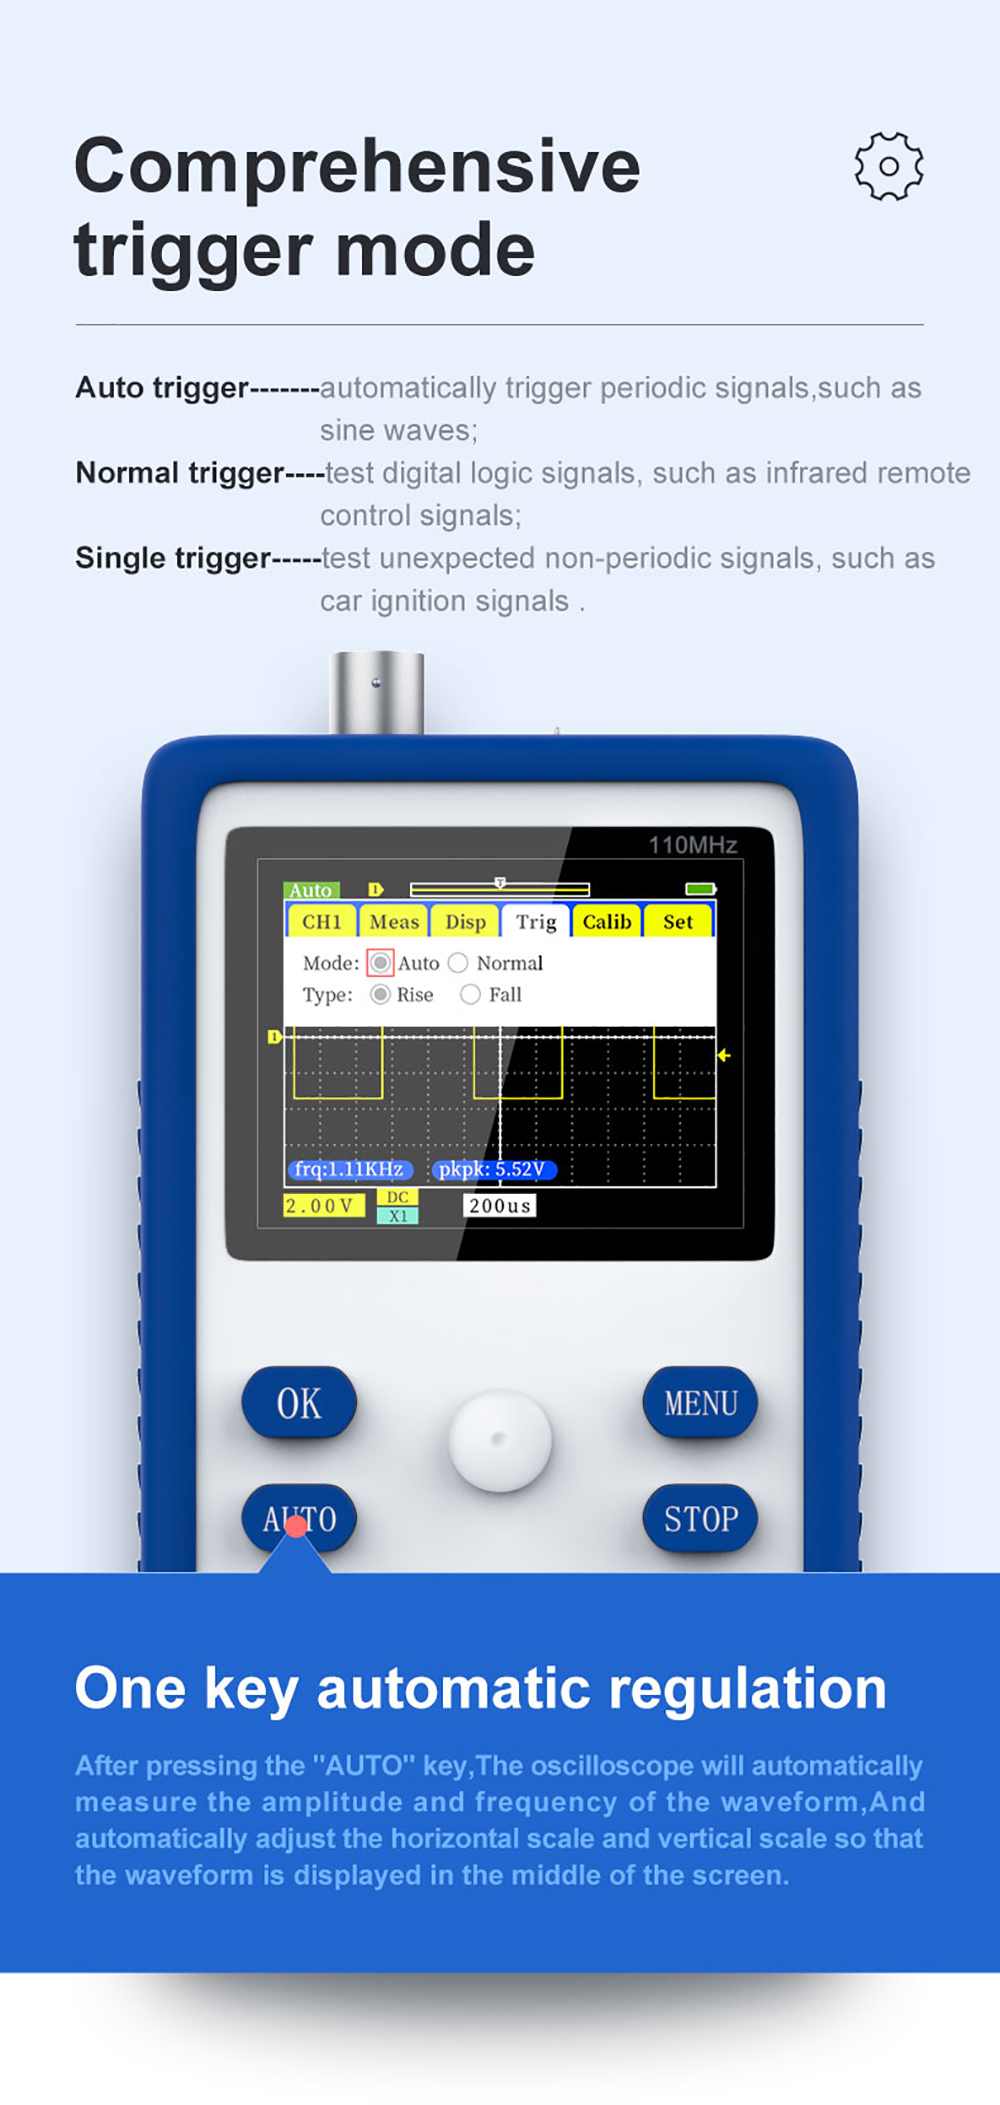 FNIRSI-1C15-Professional-Digital-Oscilloscope-500MSs-Sampling-Rate-110MHz-Analog-Bandwidth-Support-W-1955096-8